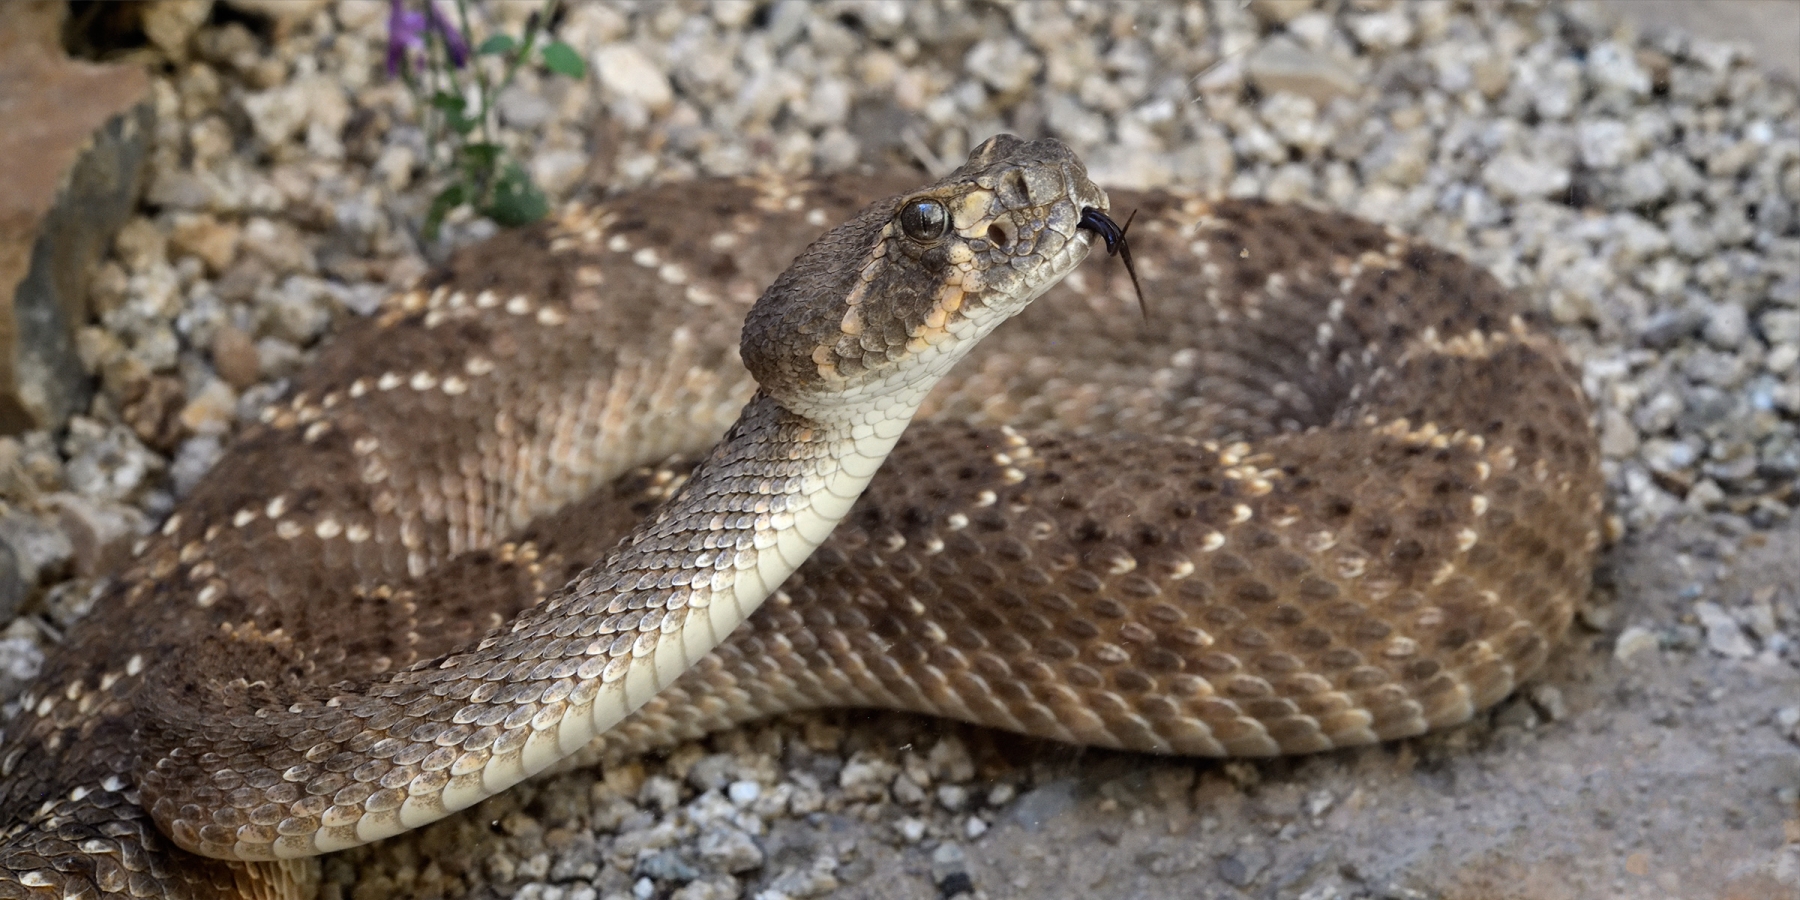 Désert de Sonora (Arizona, USA) - Serpent à sonnette (rattlesnake) se redressant avec langue sortie